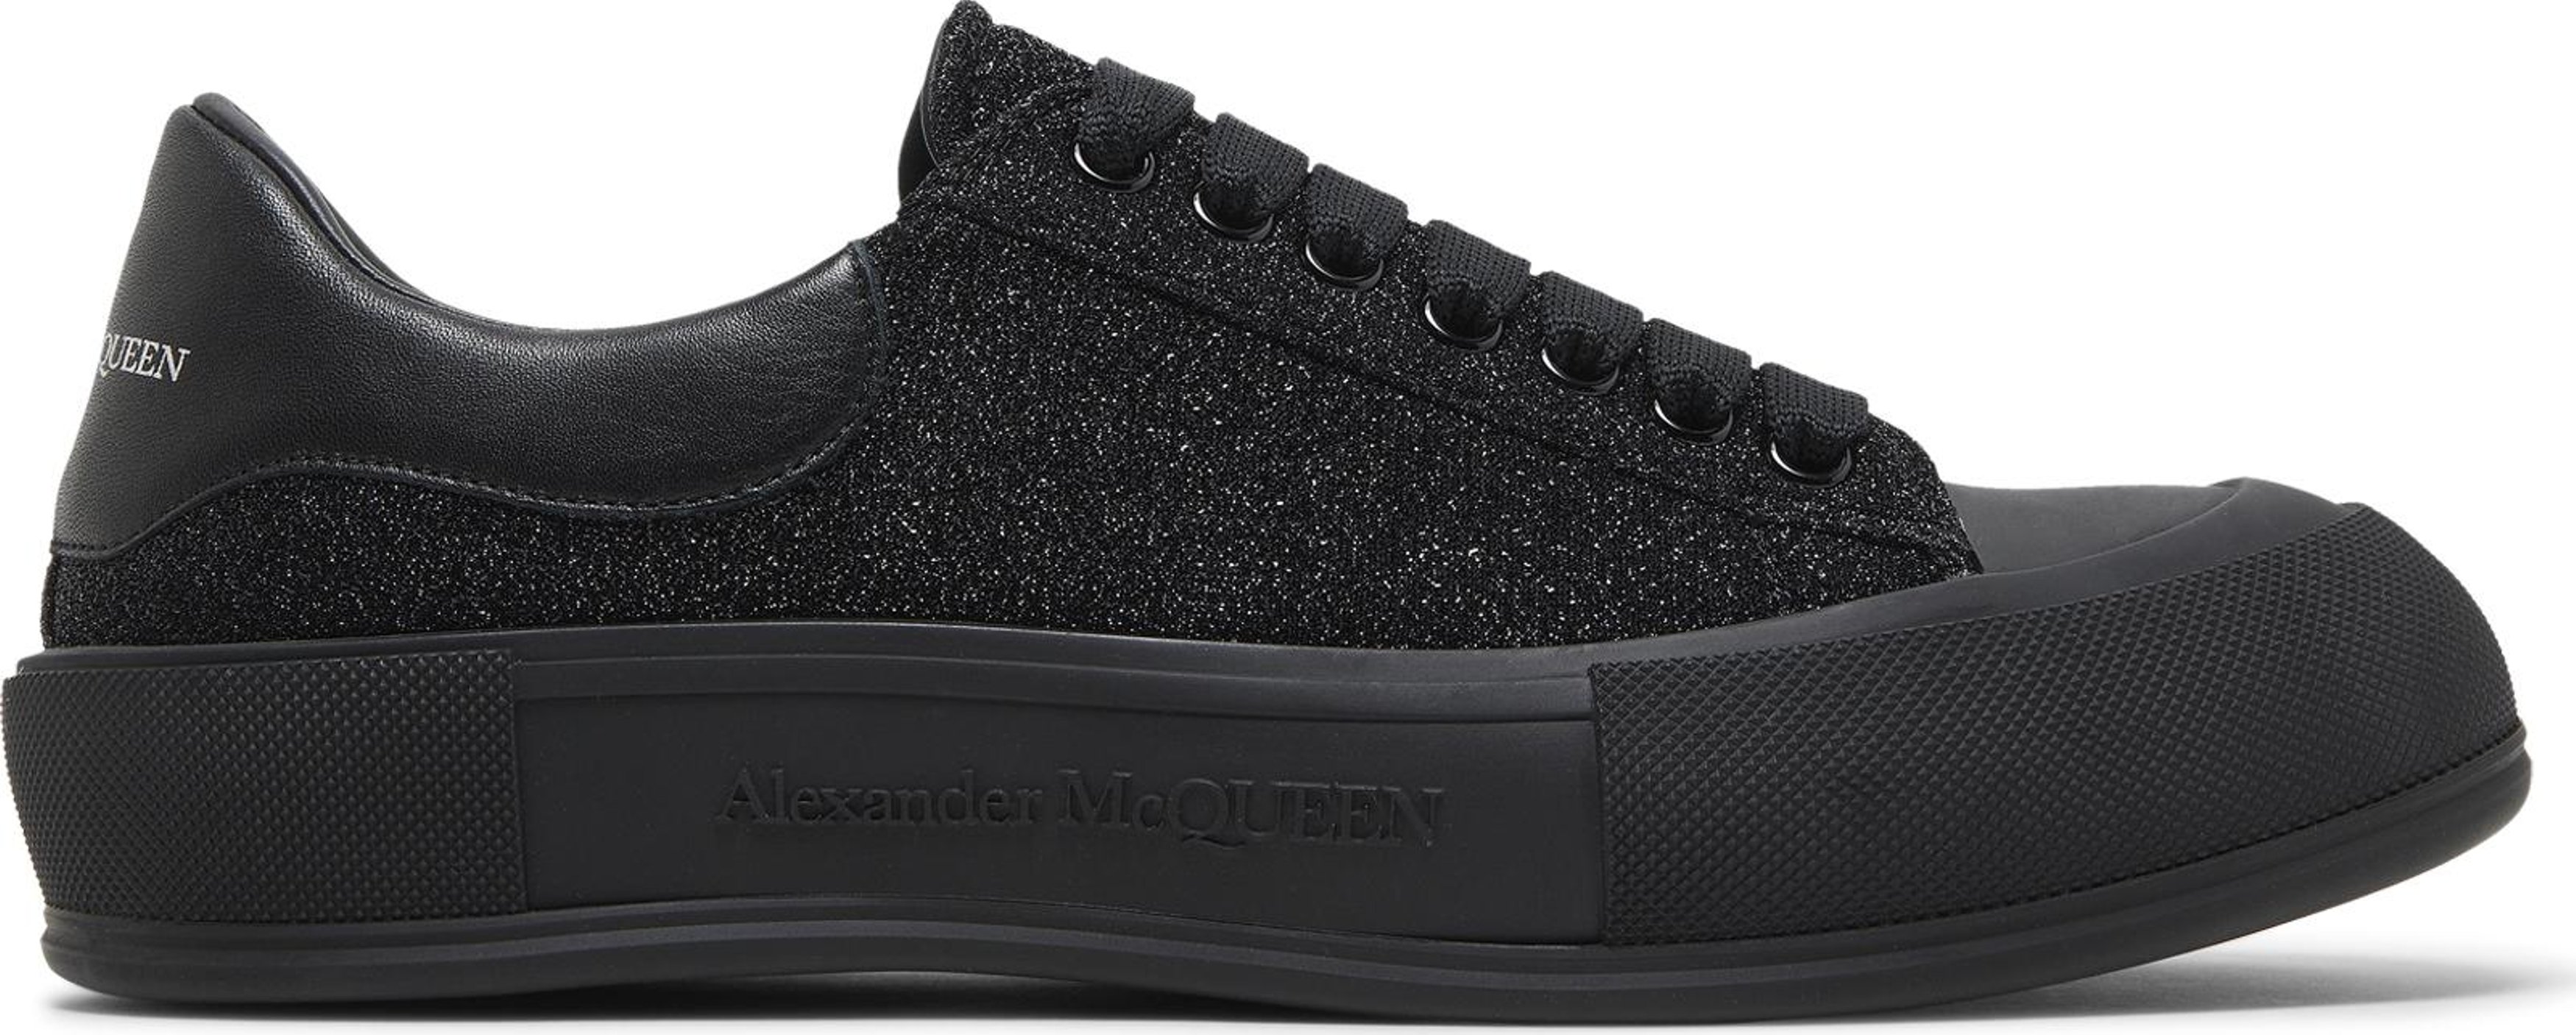 Buy Alexander McQueen Deck Plimsoll 'Black Glitter' - 682409 W4RU2 4503 ...